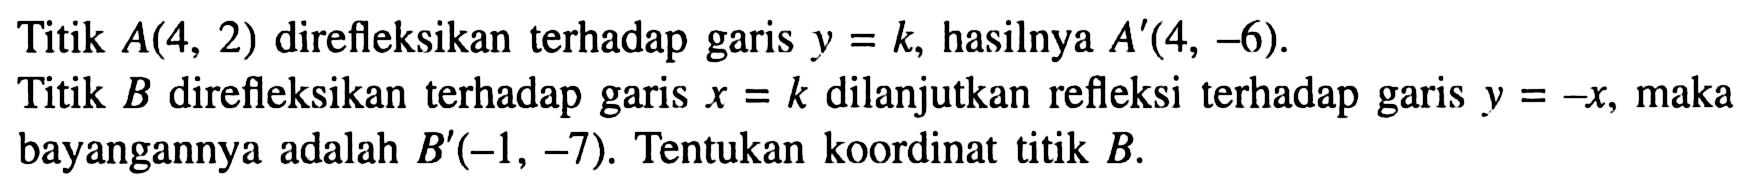 Titik A(4,2) direfleksikan terhadap garis y=k, hasilnya A'(4,-6) Titik B direfleksikan terhadap garis x=k dilanjutkan refleksi terhadap garis y=-x, maka bayangannya adalah B'(-1,-7). Tentukan koordinat titik B.